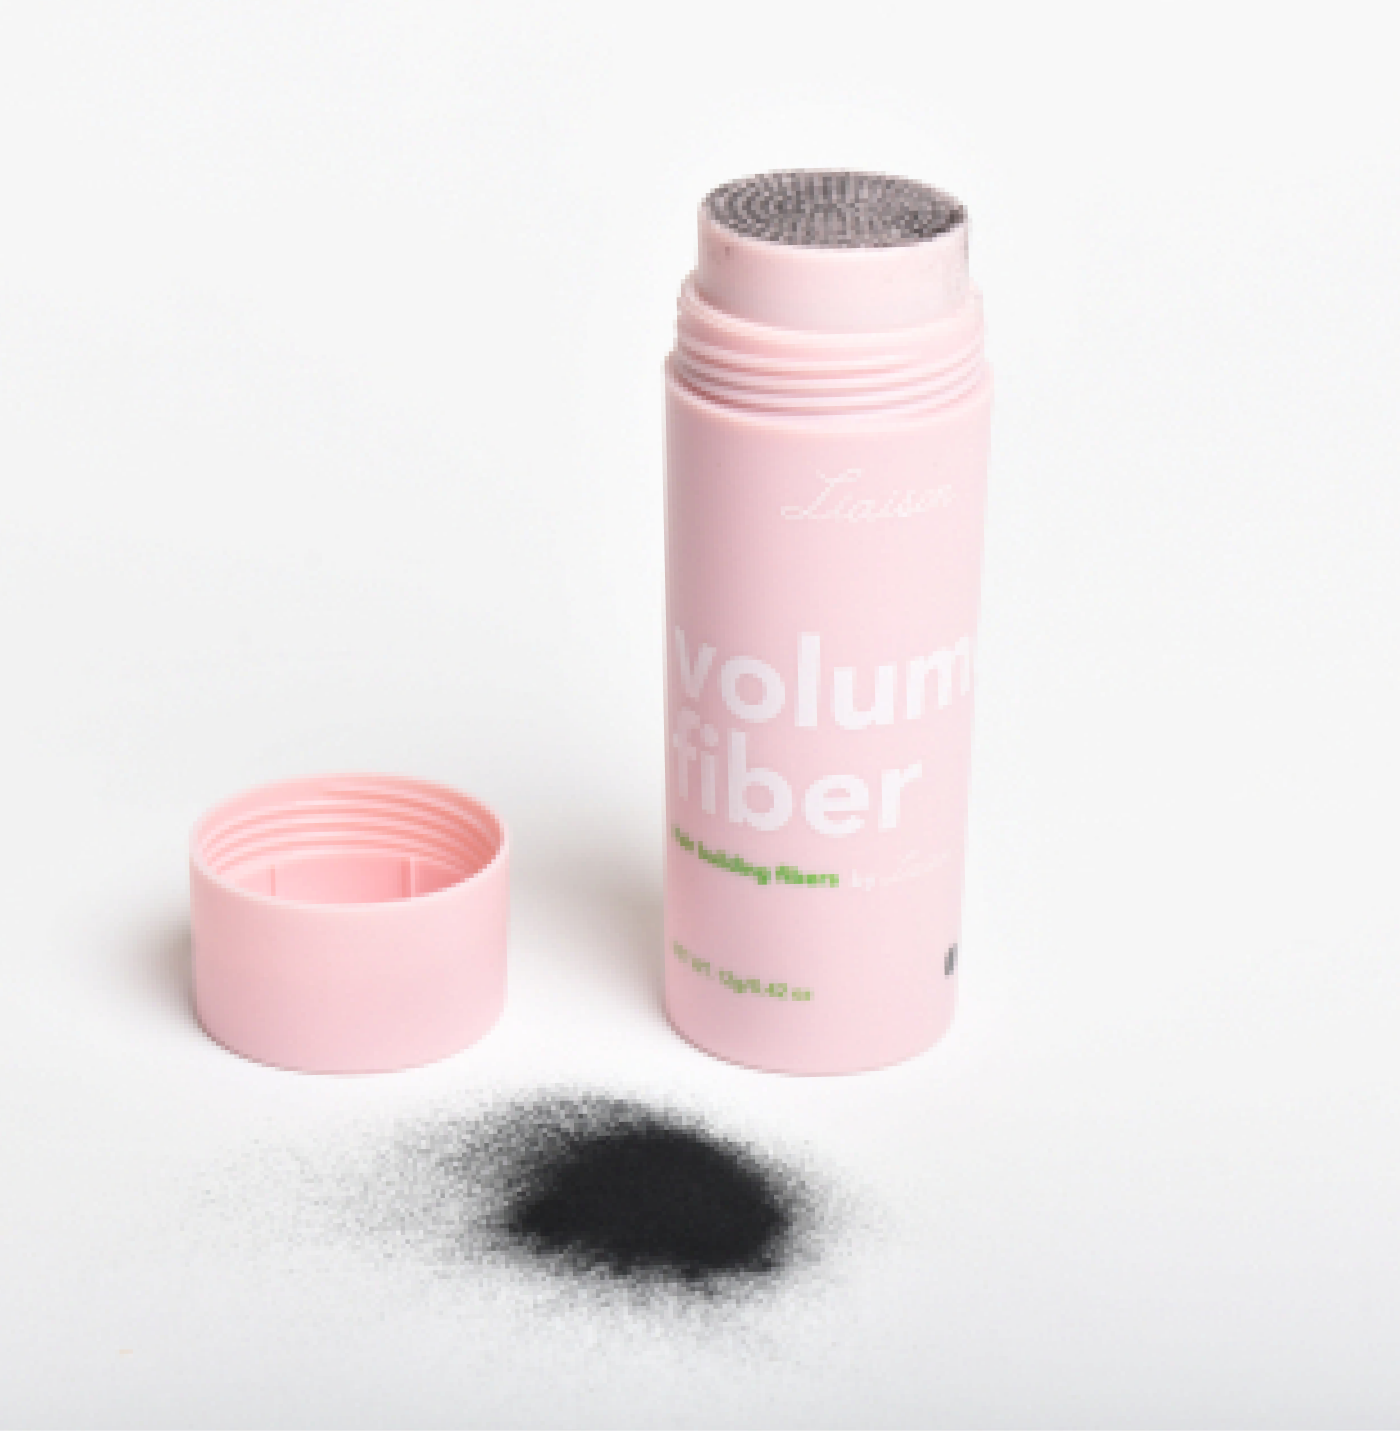 Volume Fiber Hair Thickening Powder - Liaison Growth